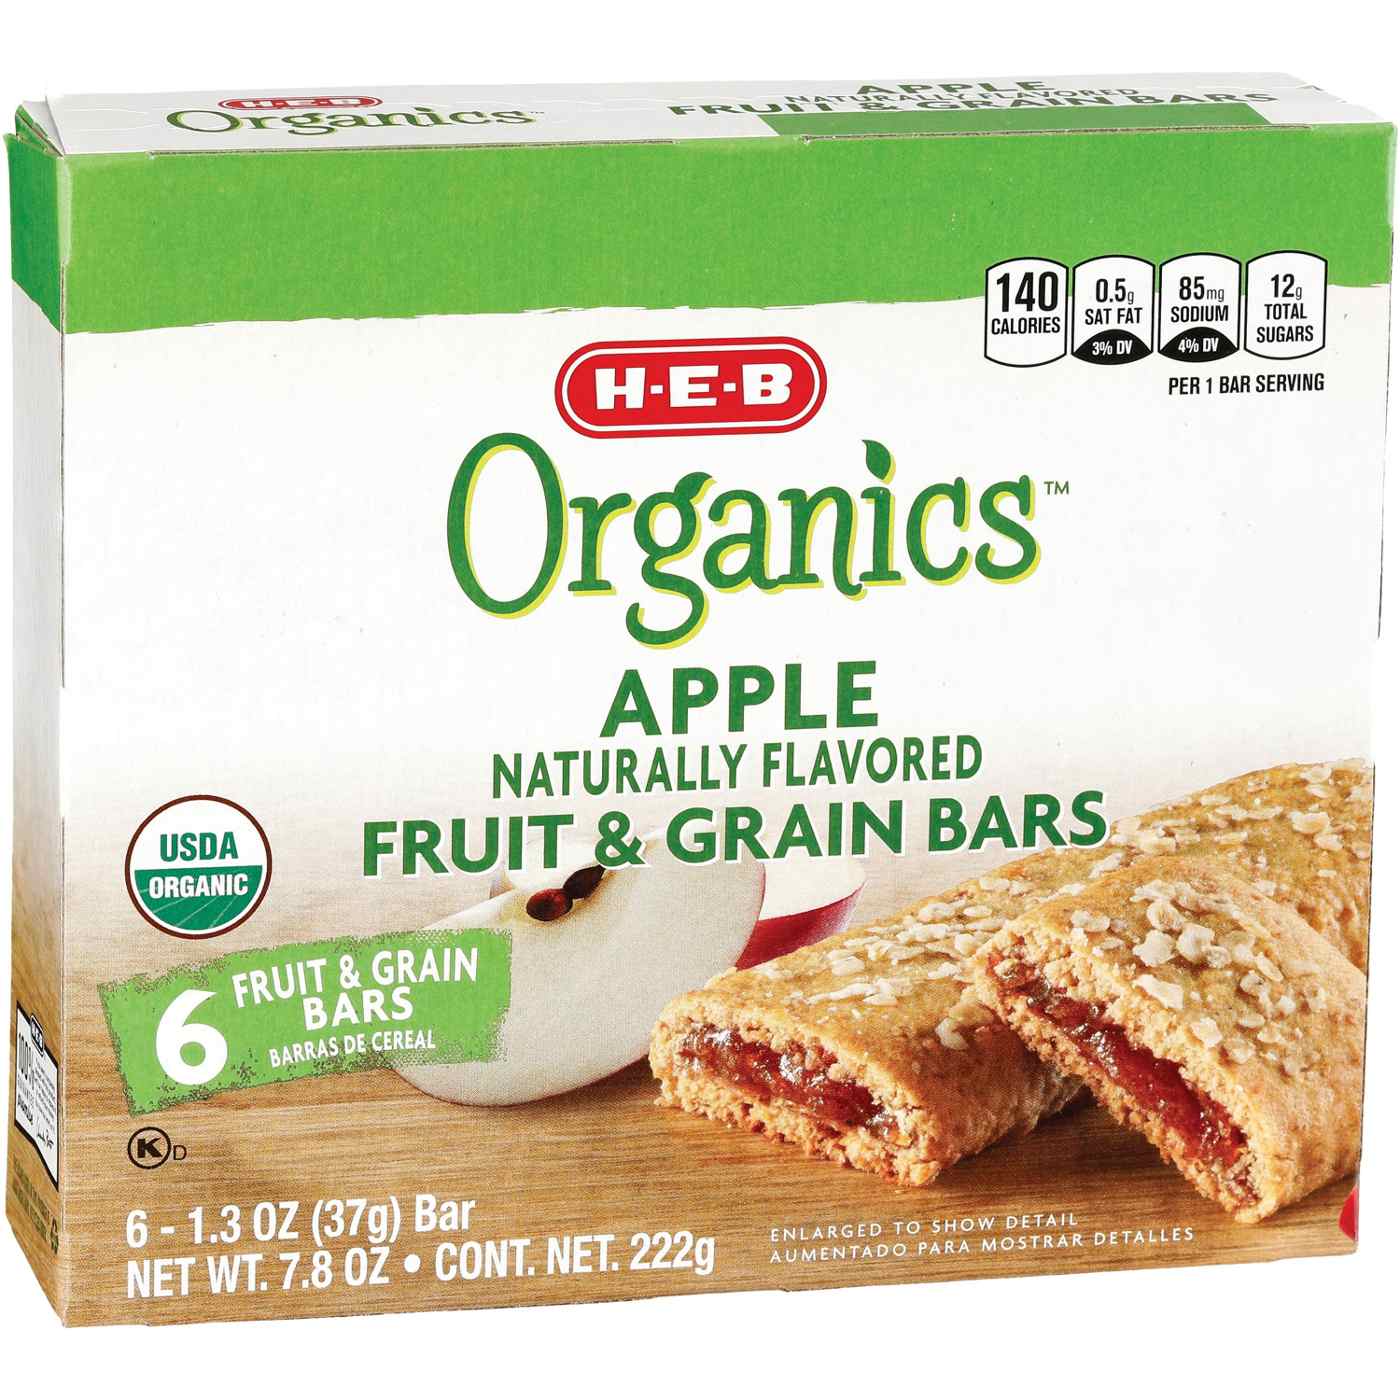 H-E-B Organics Fruit & Grain Bars - Apple; image 2 of 2